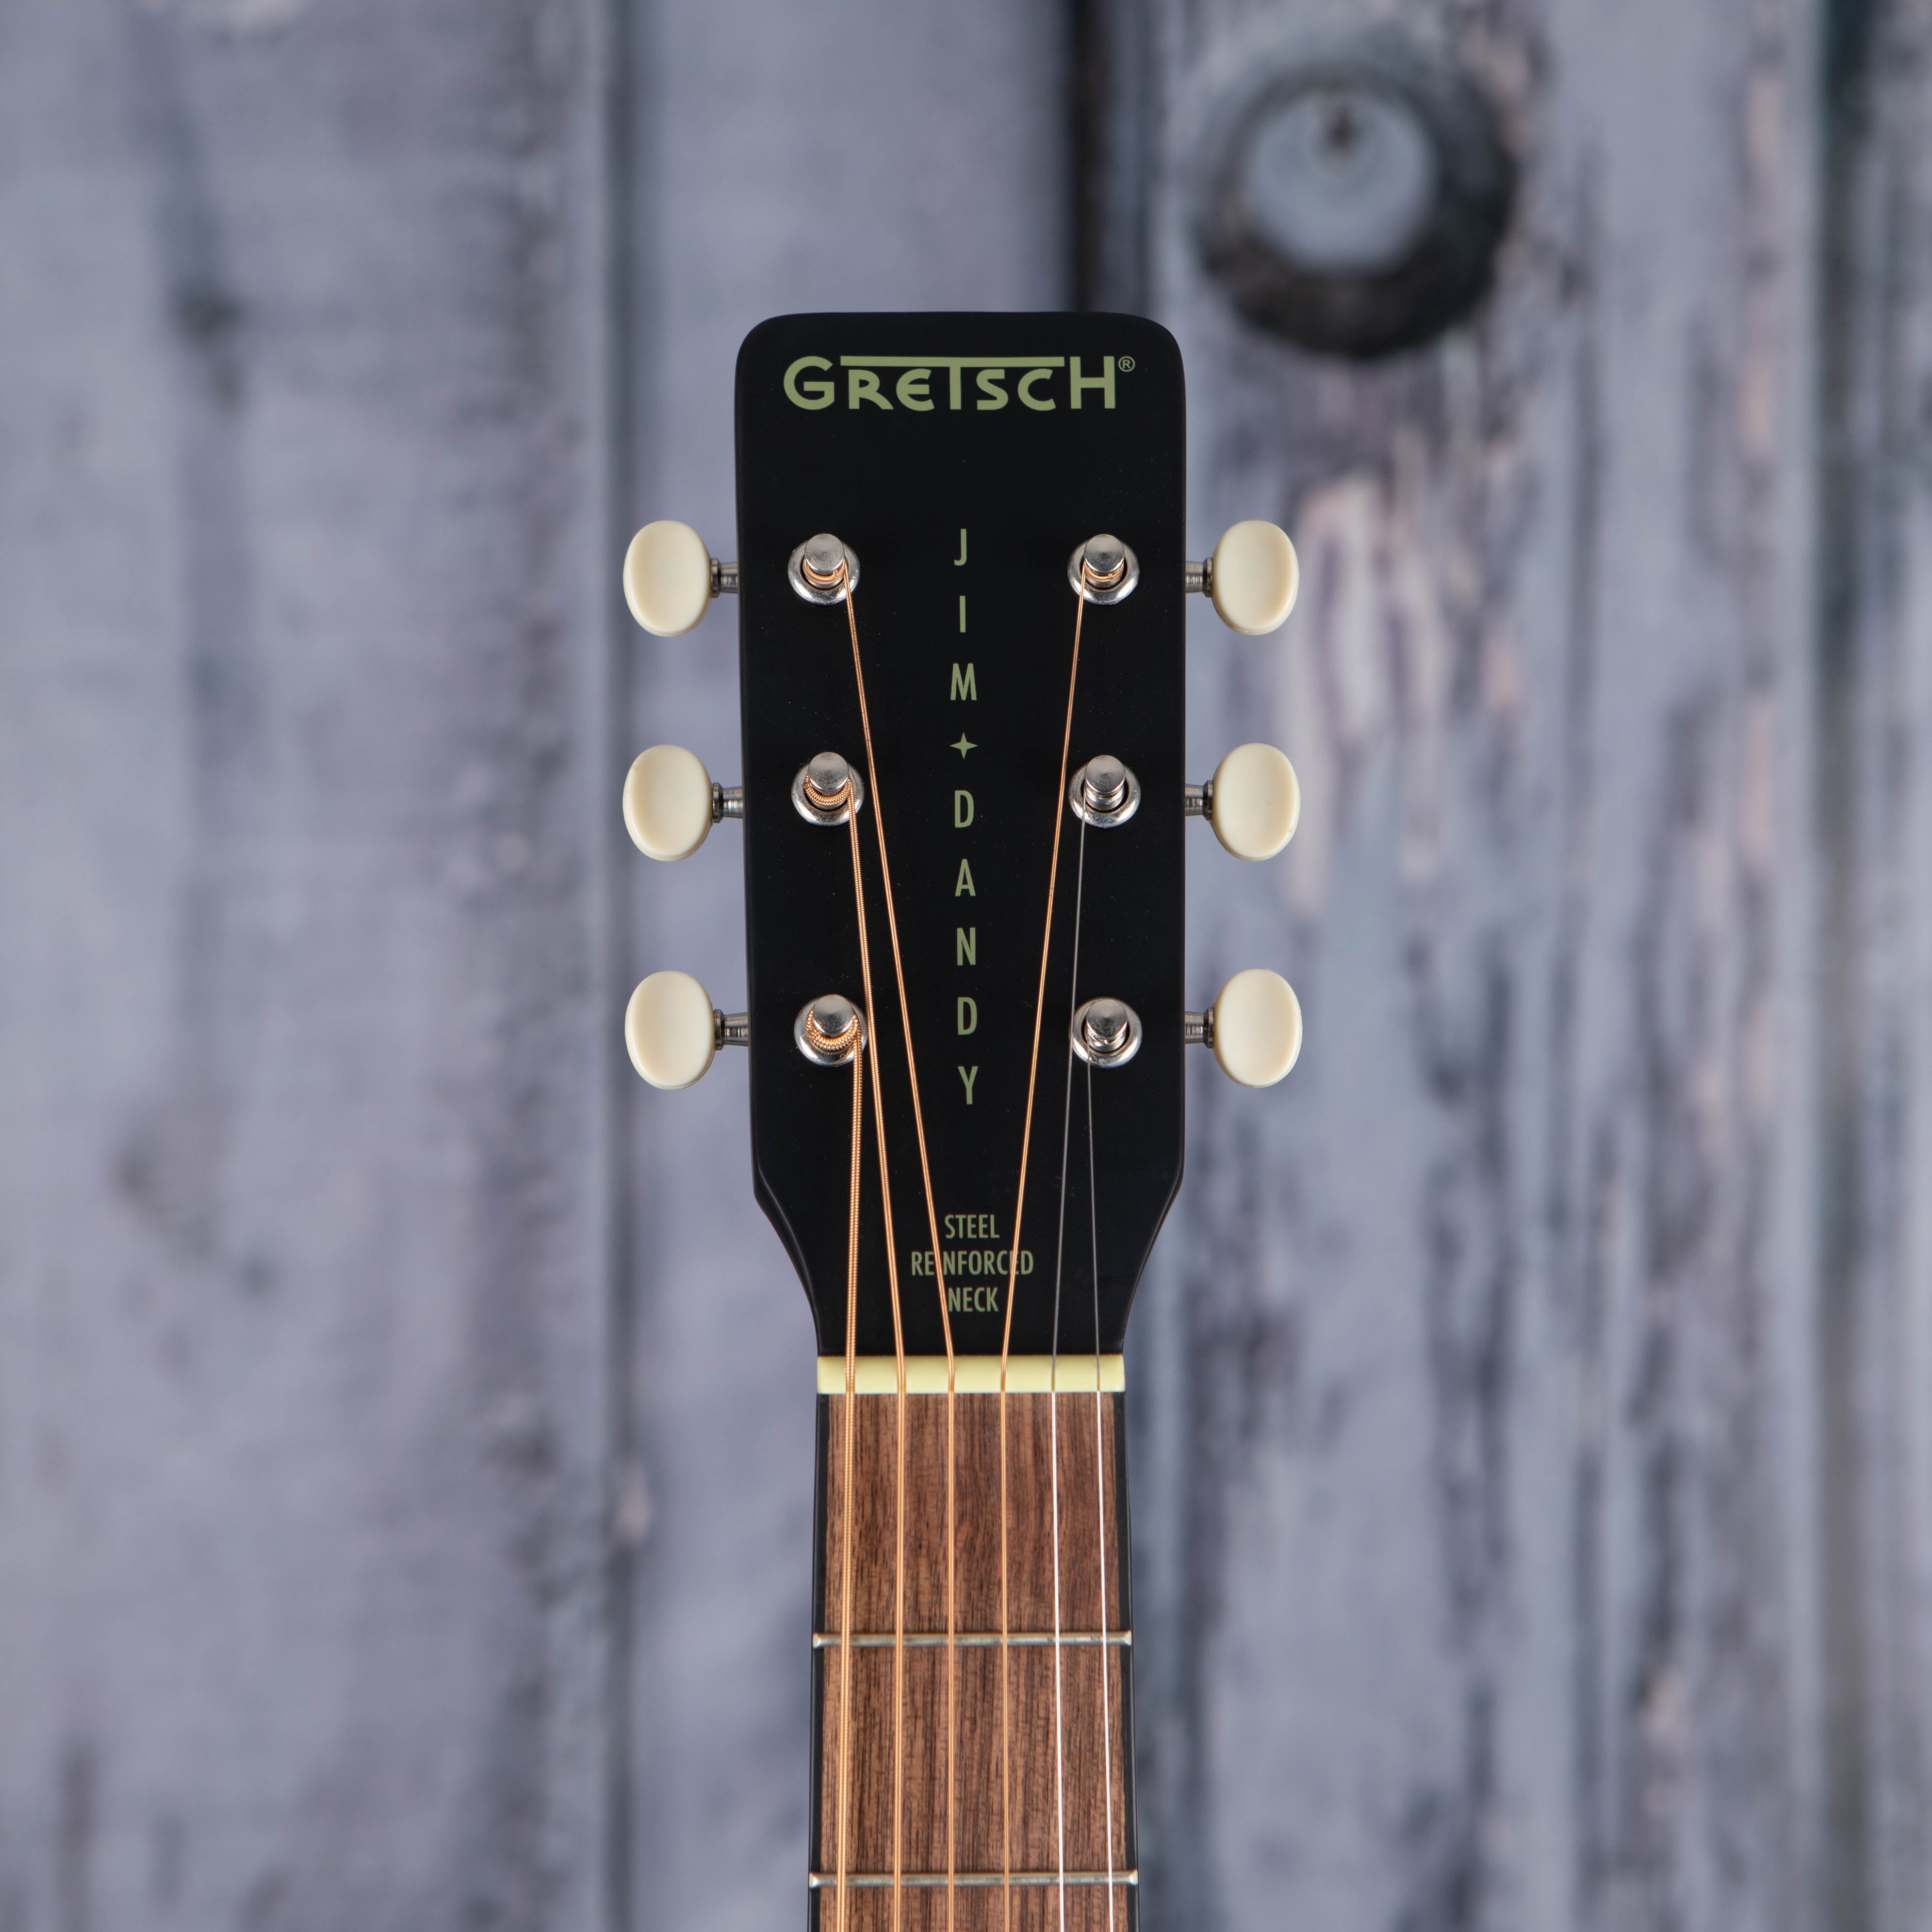 Gretsch G9500 Jim Dandy 24" Flat Top Acoustic Guitar, 2-Color Sunburst, front headstock